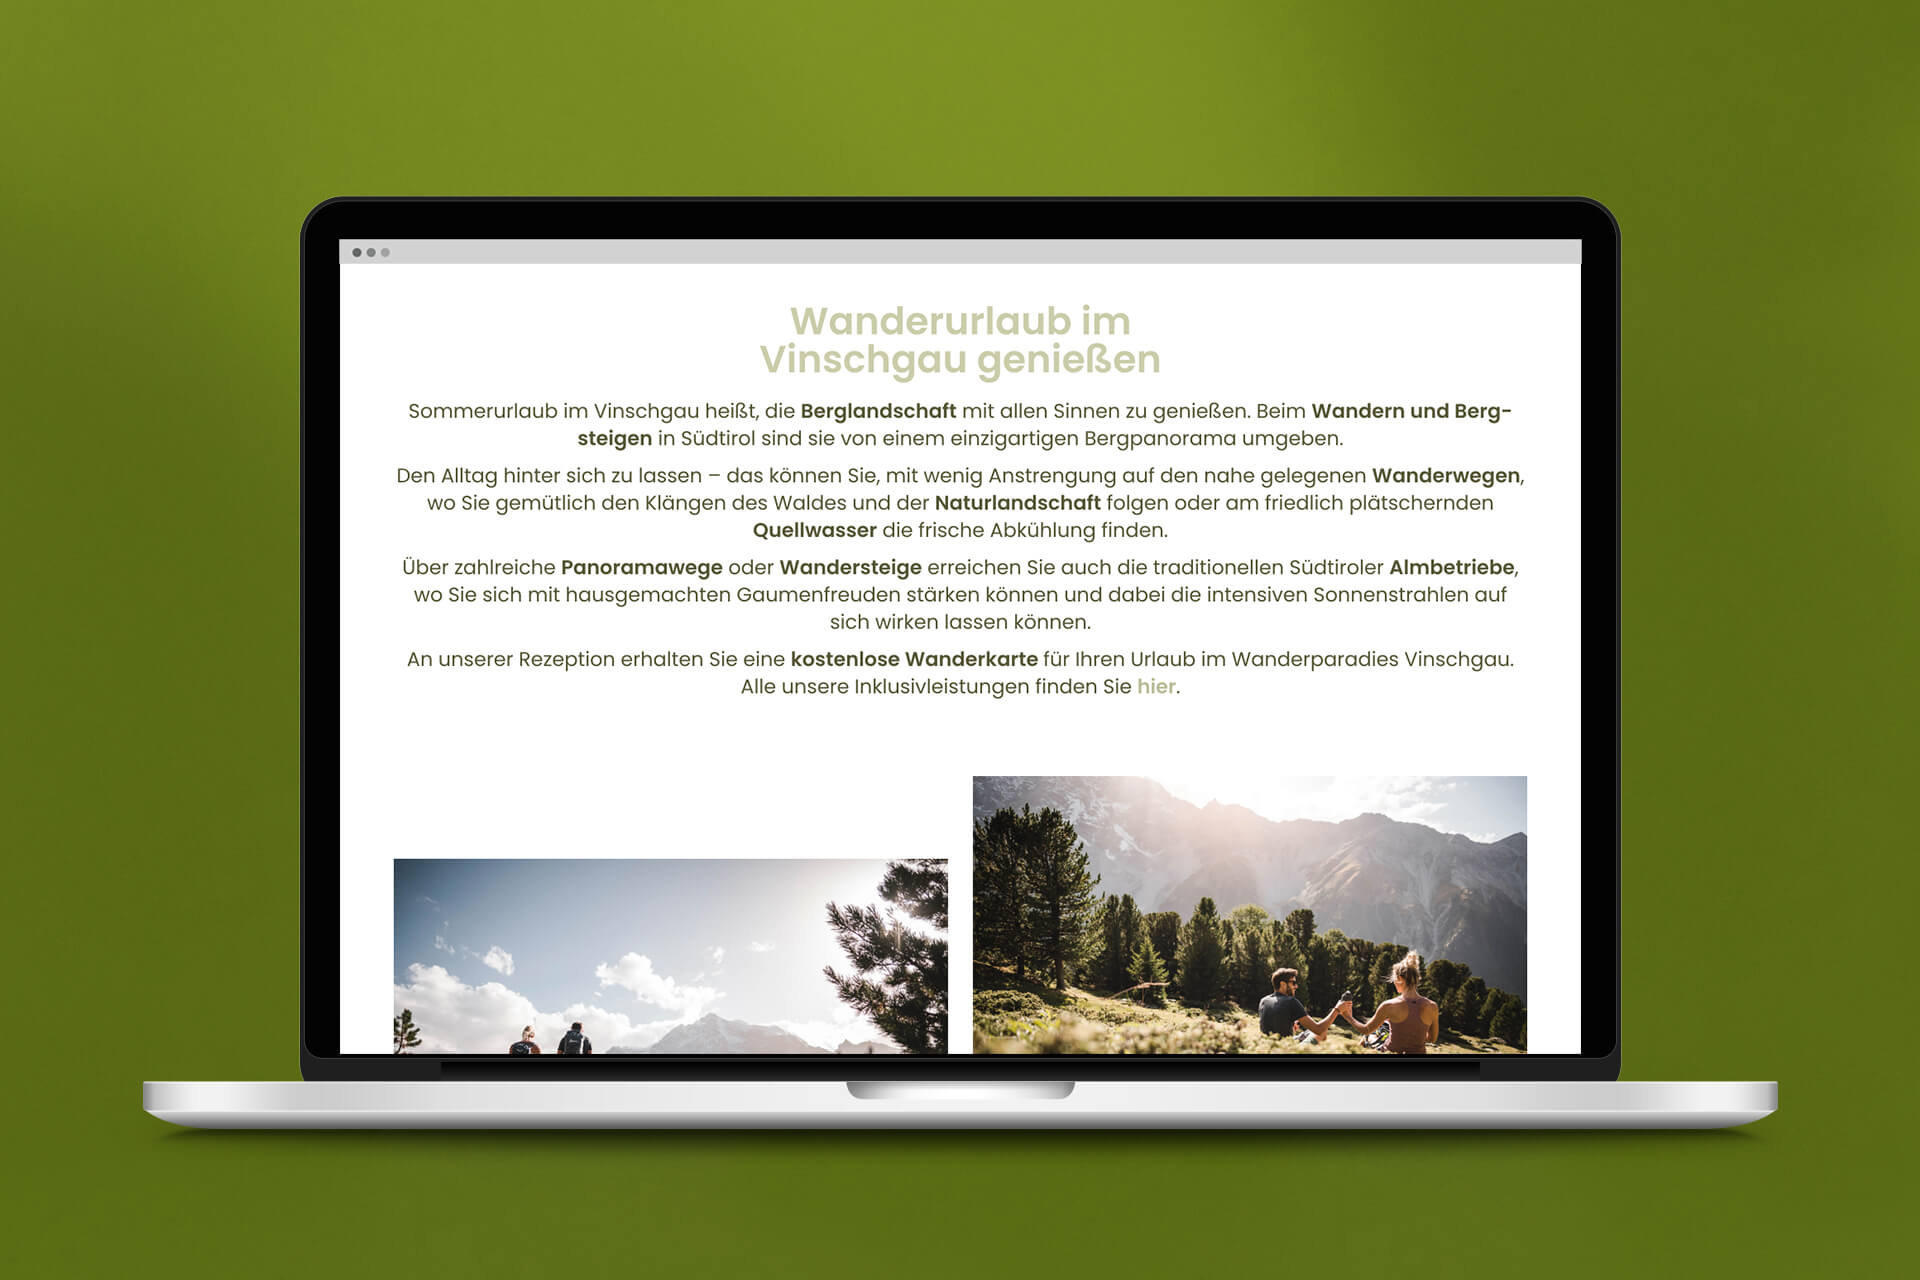 Genusshotel Panorama > Webseite